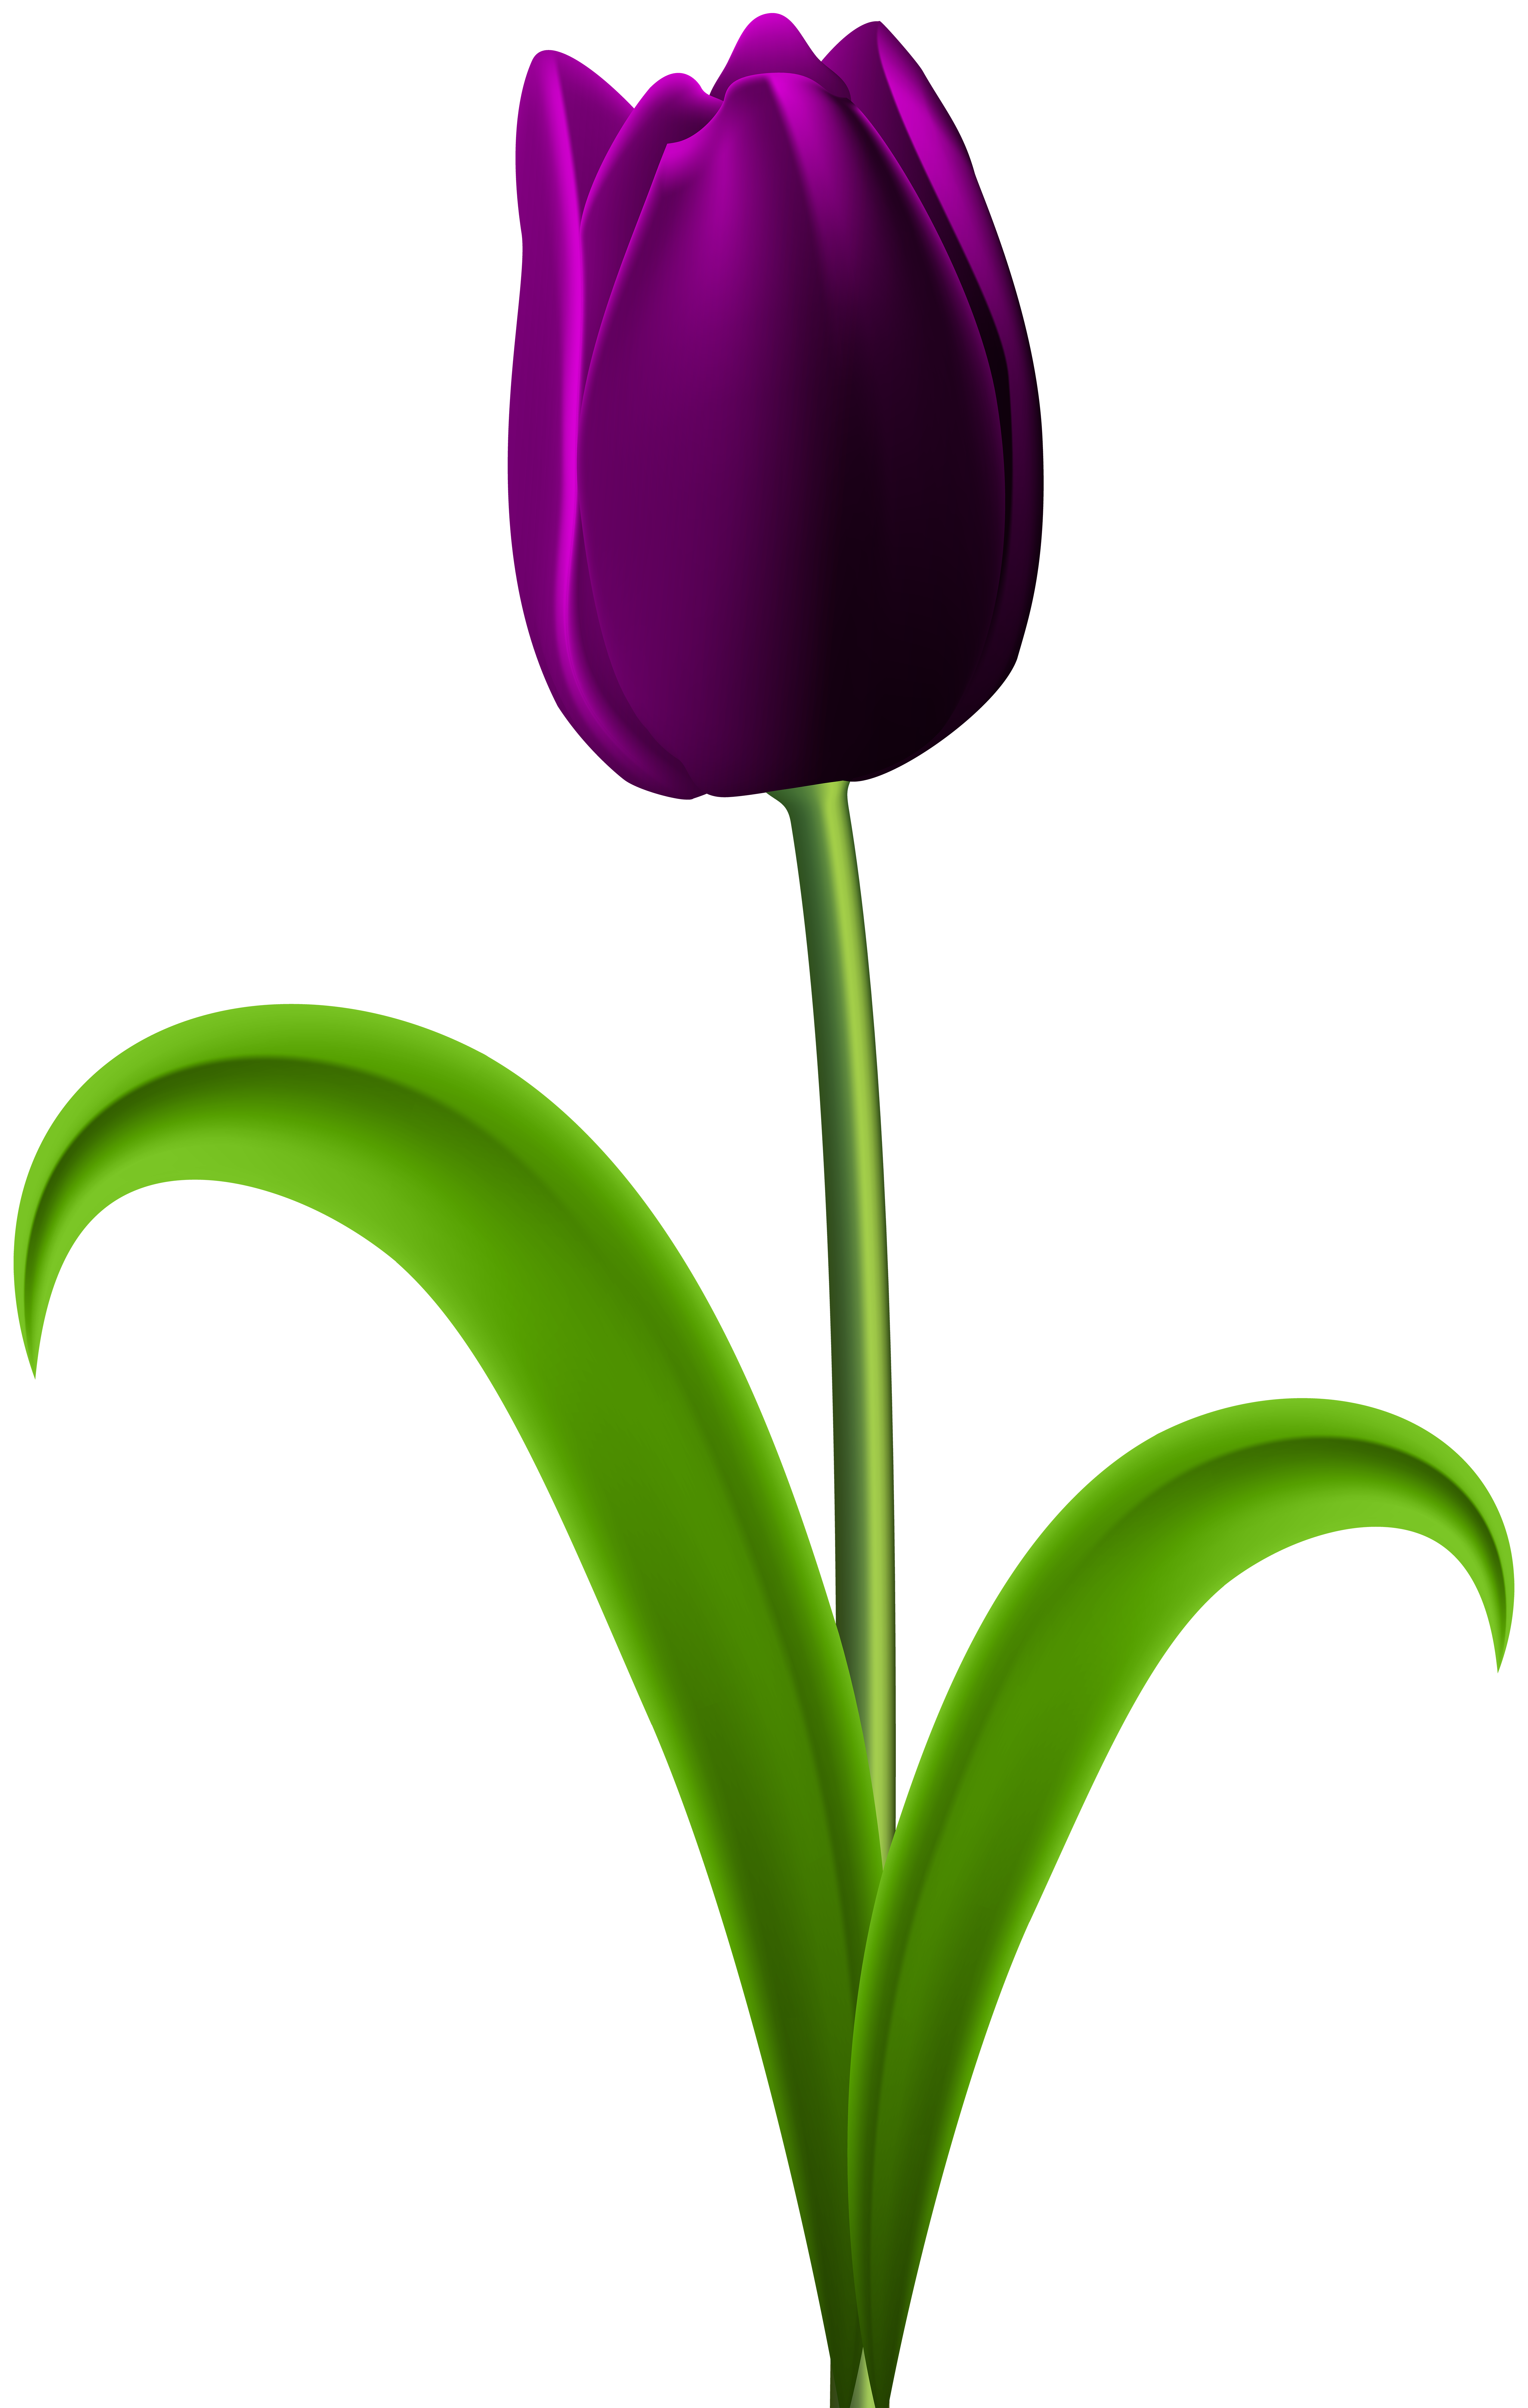 Purple Tulip Transparent PNG Clip Art Image | Gallery Yopriceville ...